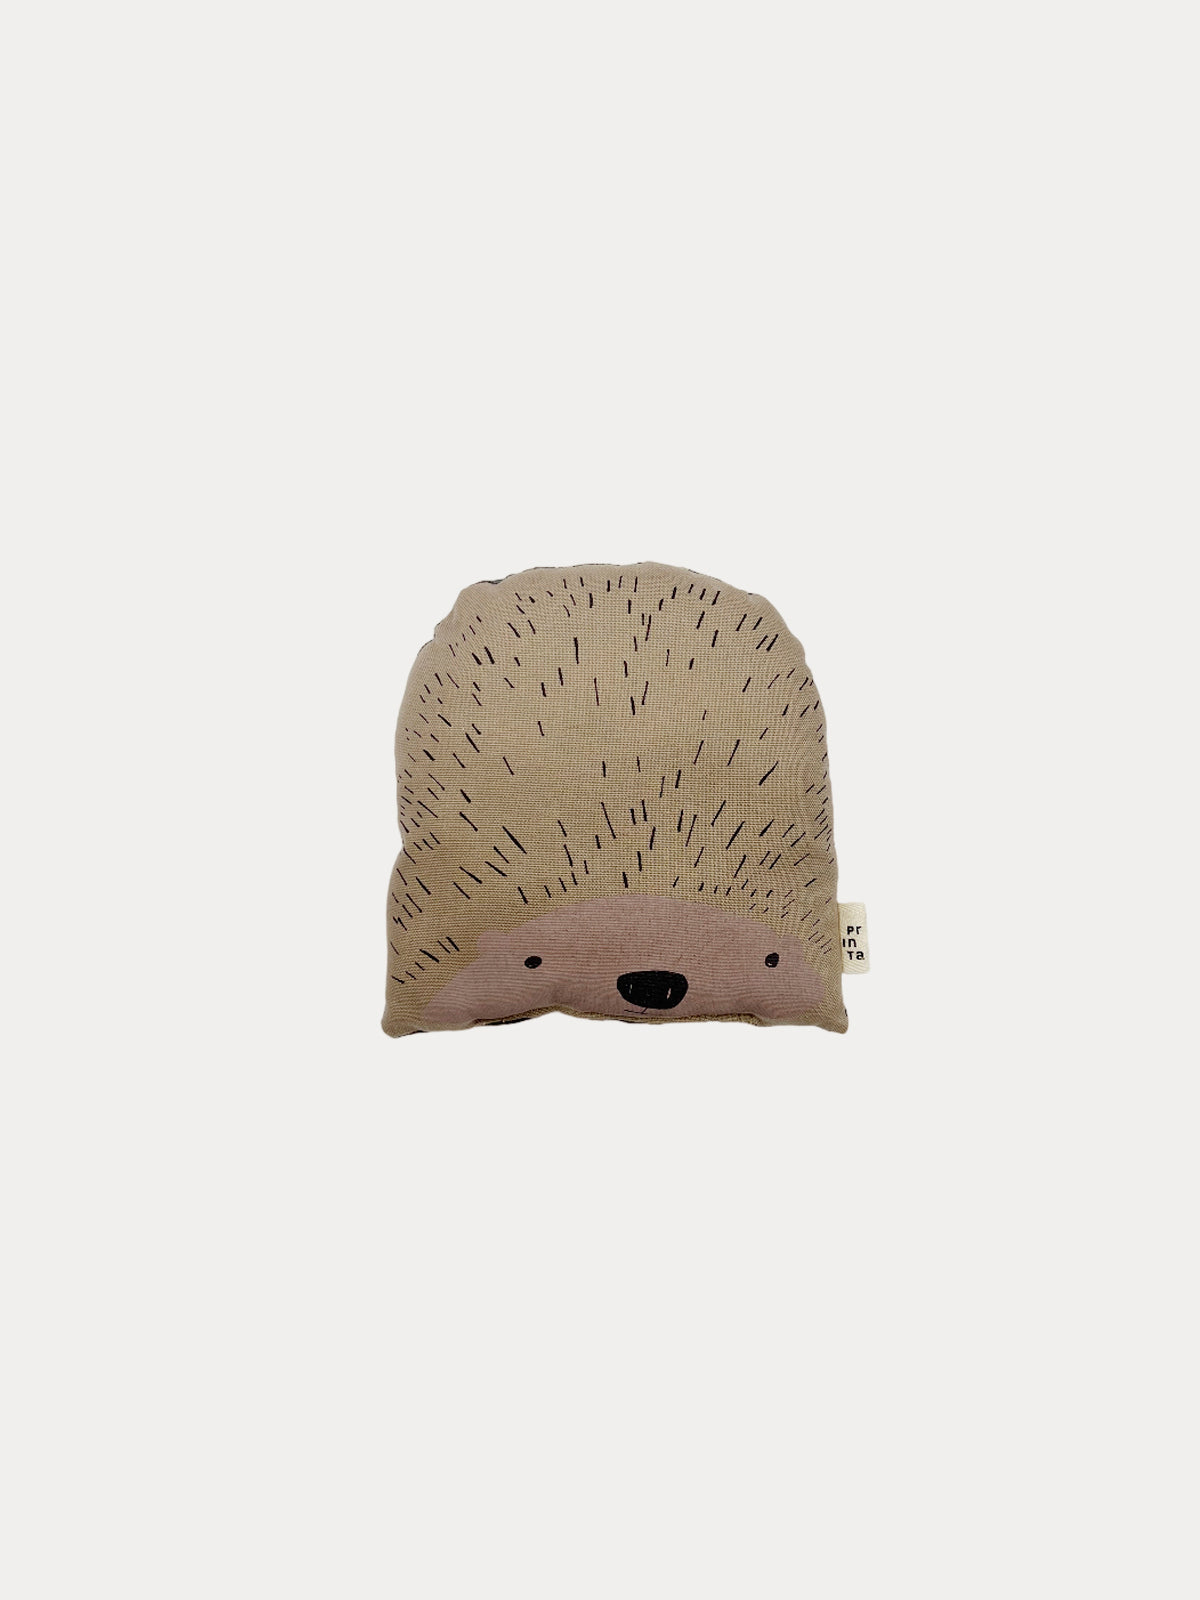 Hedgehog pillow doll